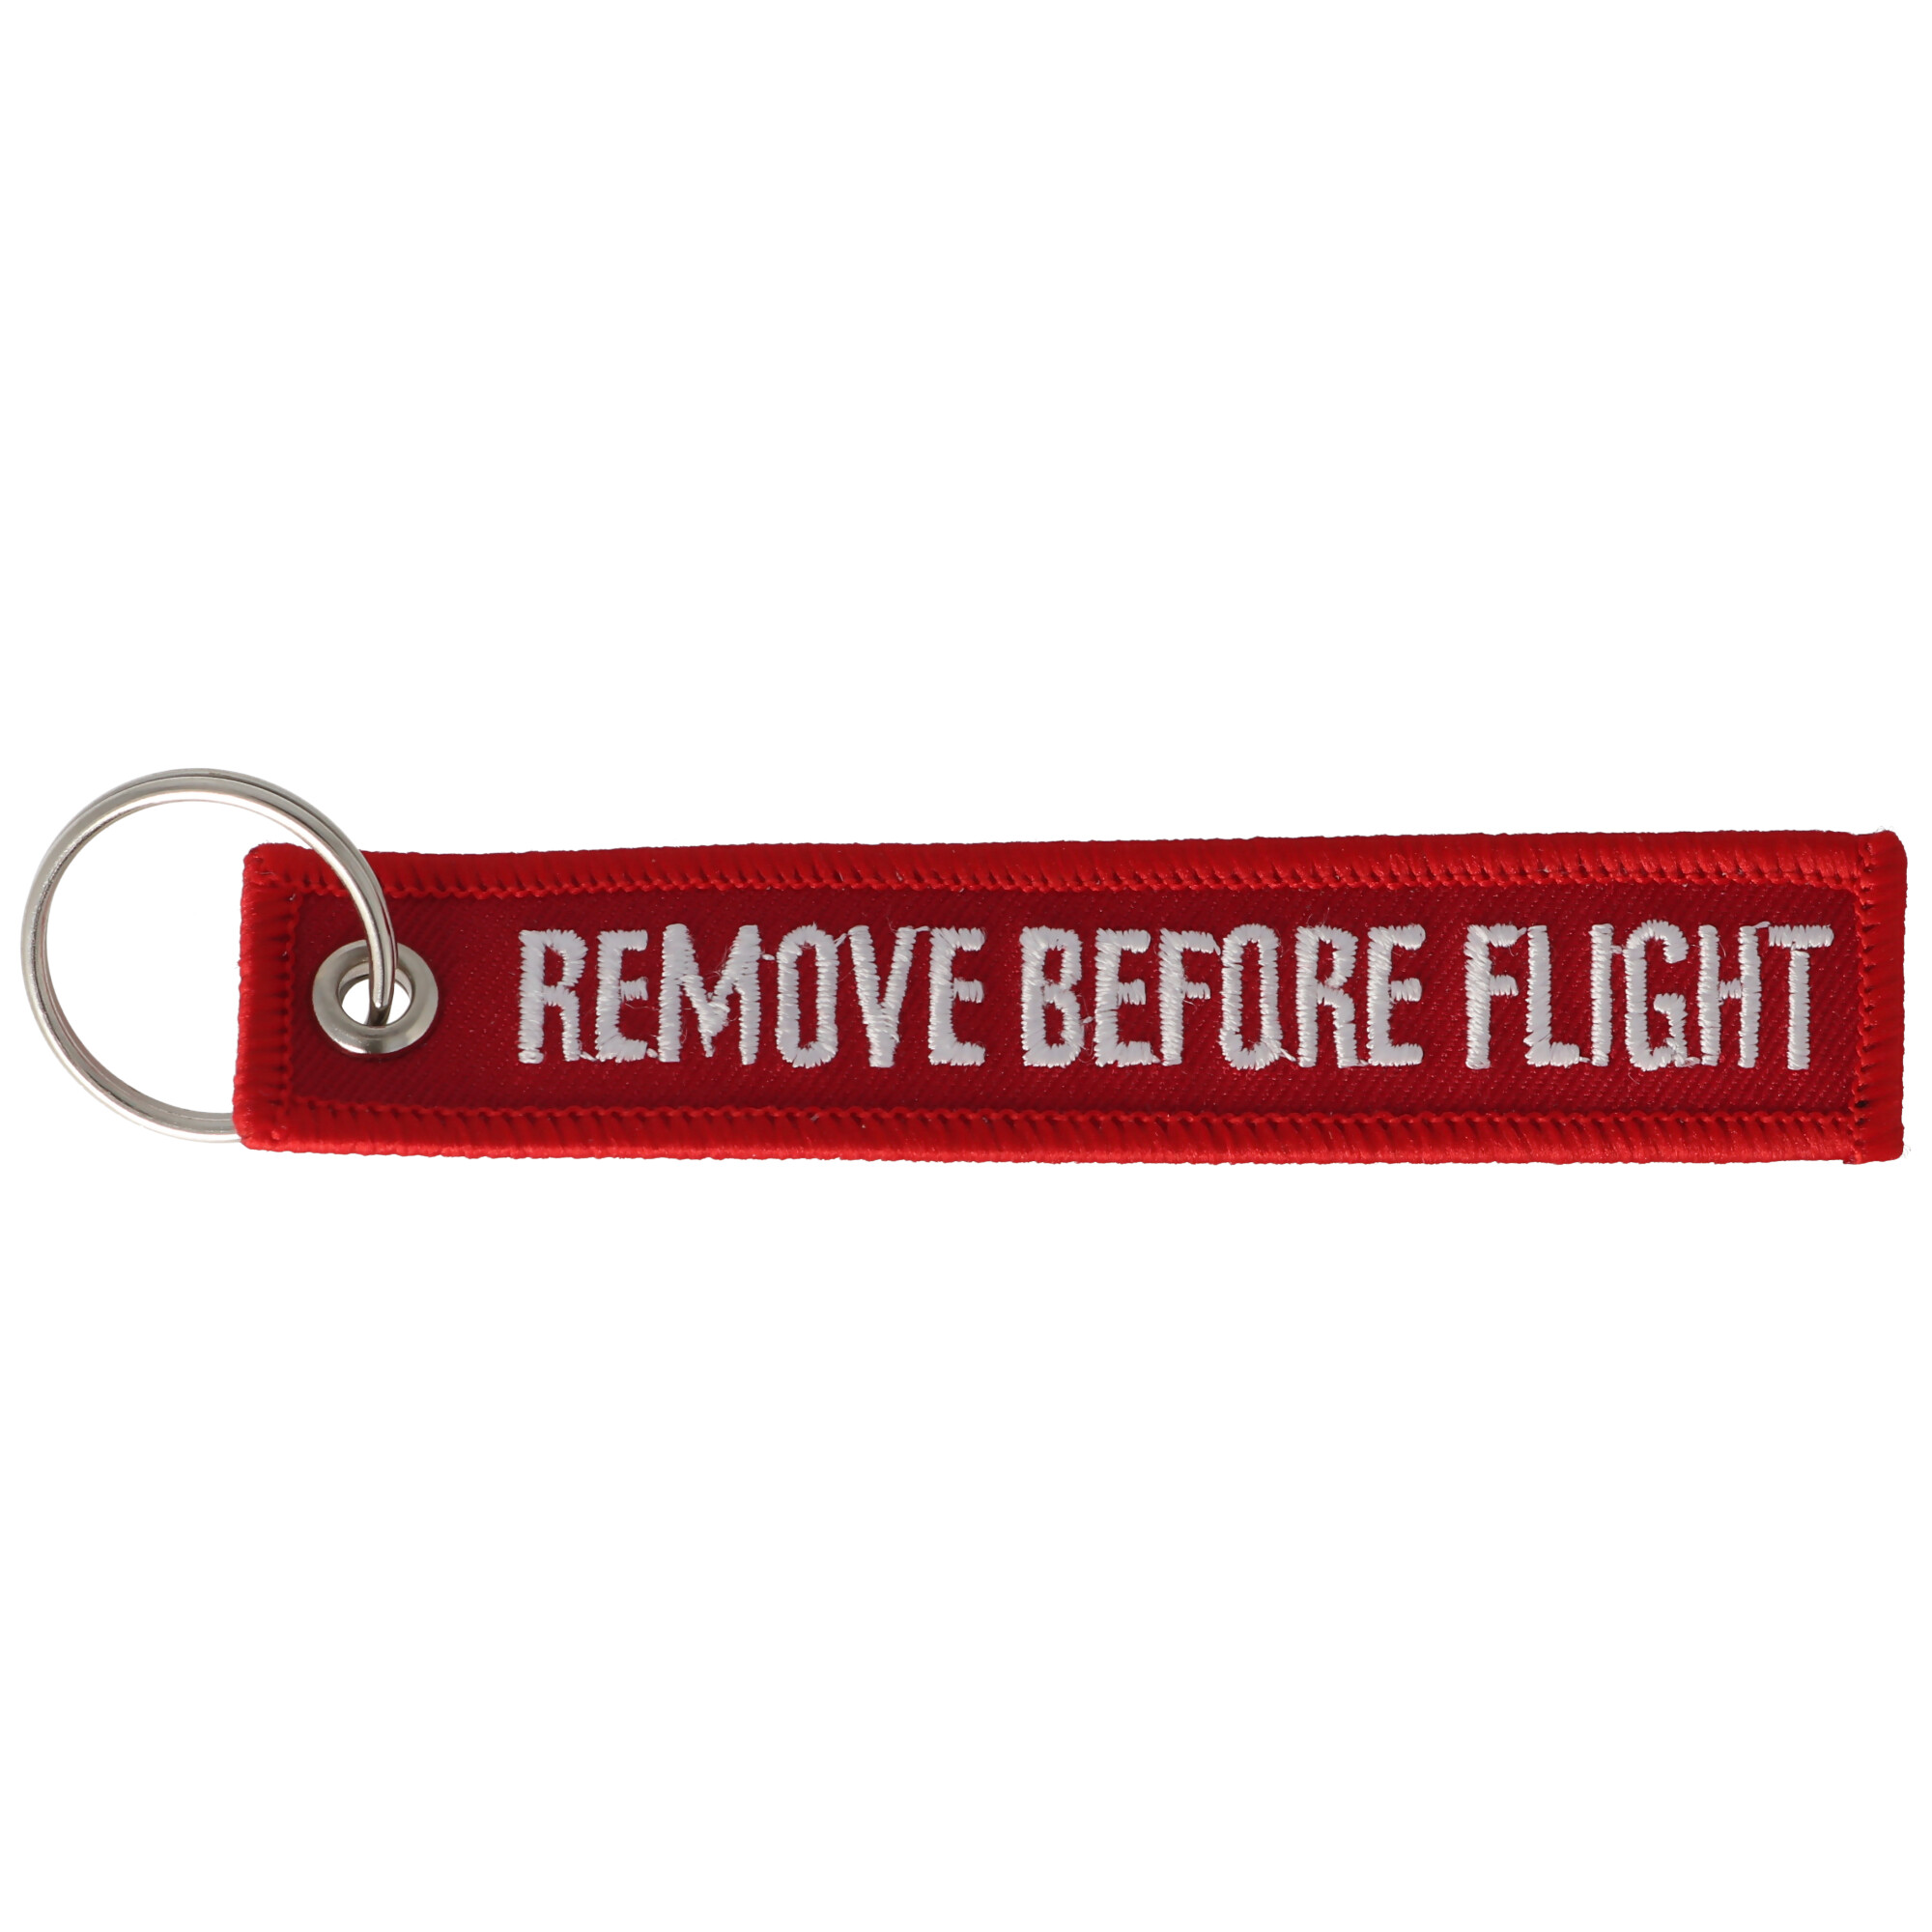 Anhänger mit Schriftzug Remove before flight Mini Abmessungen ca. 10,9 x 2,2 cm